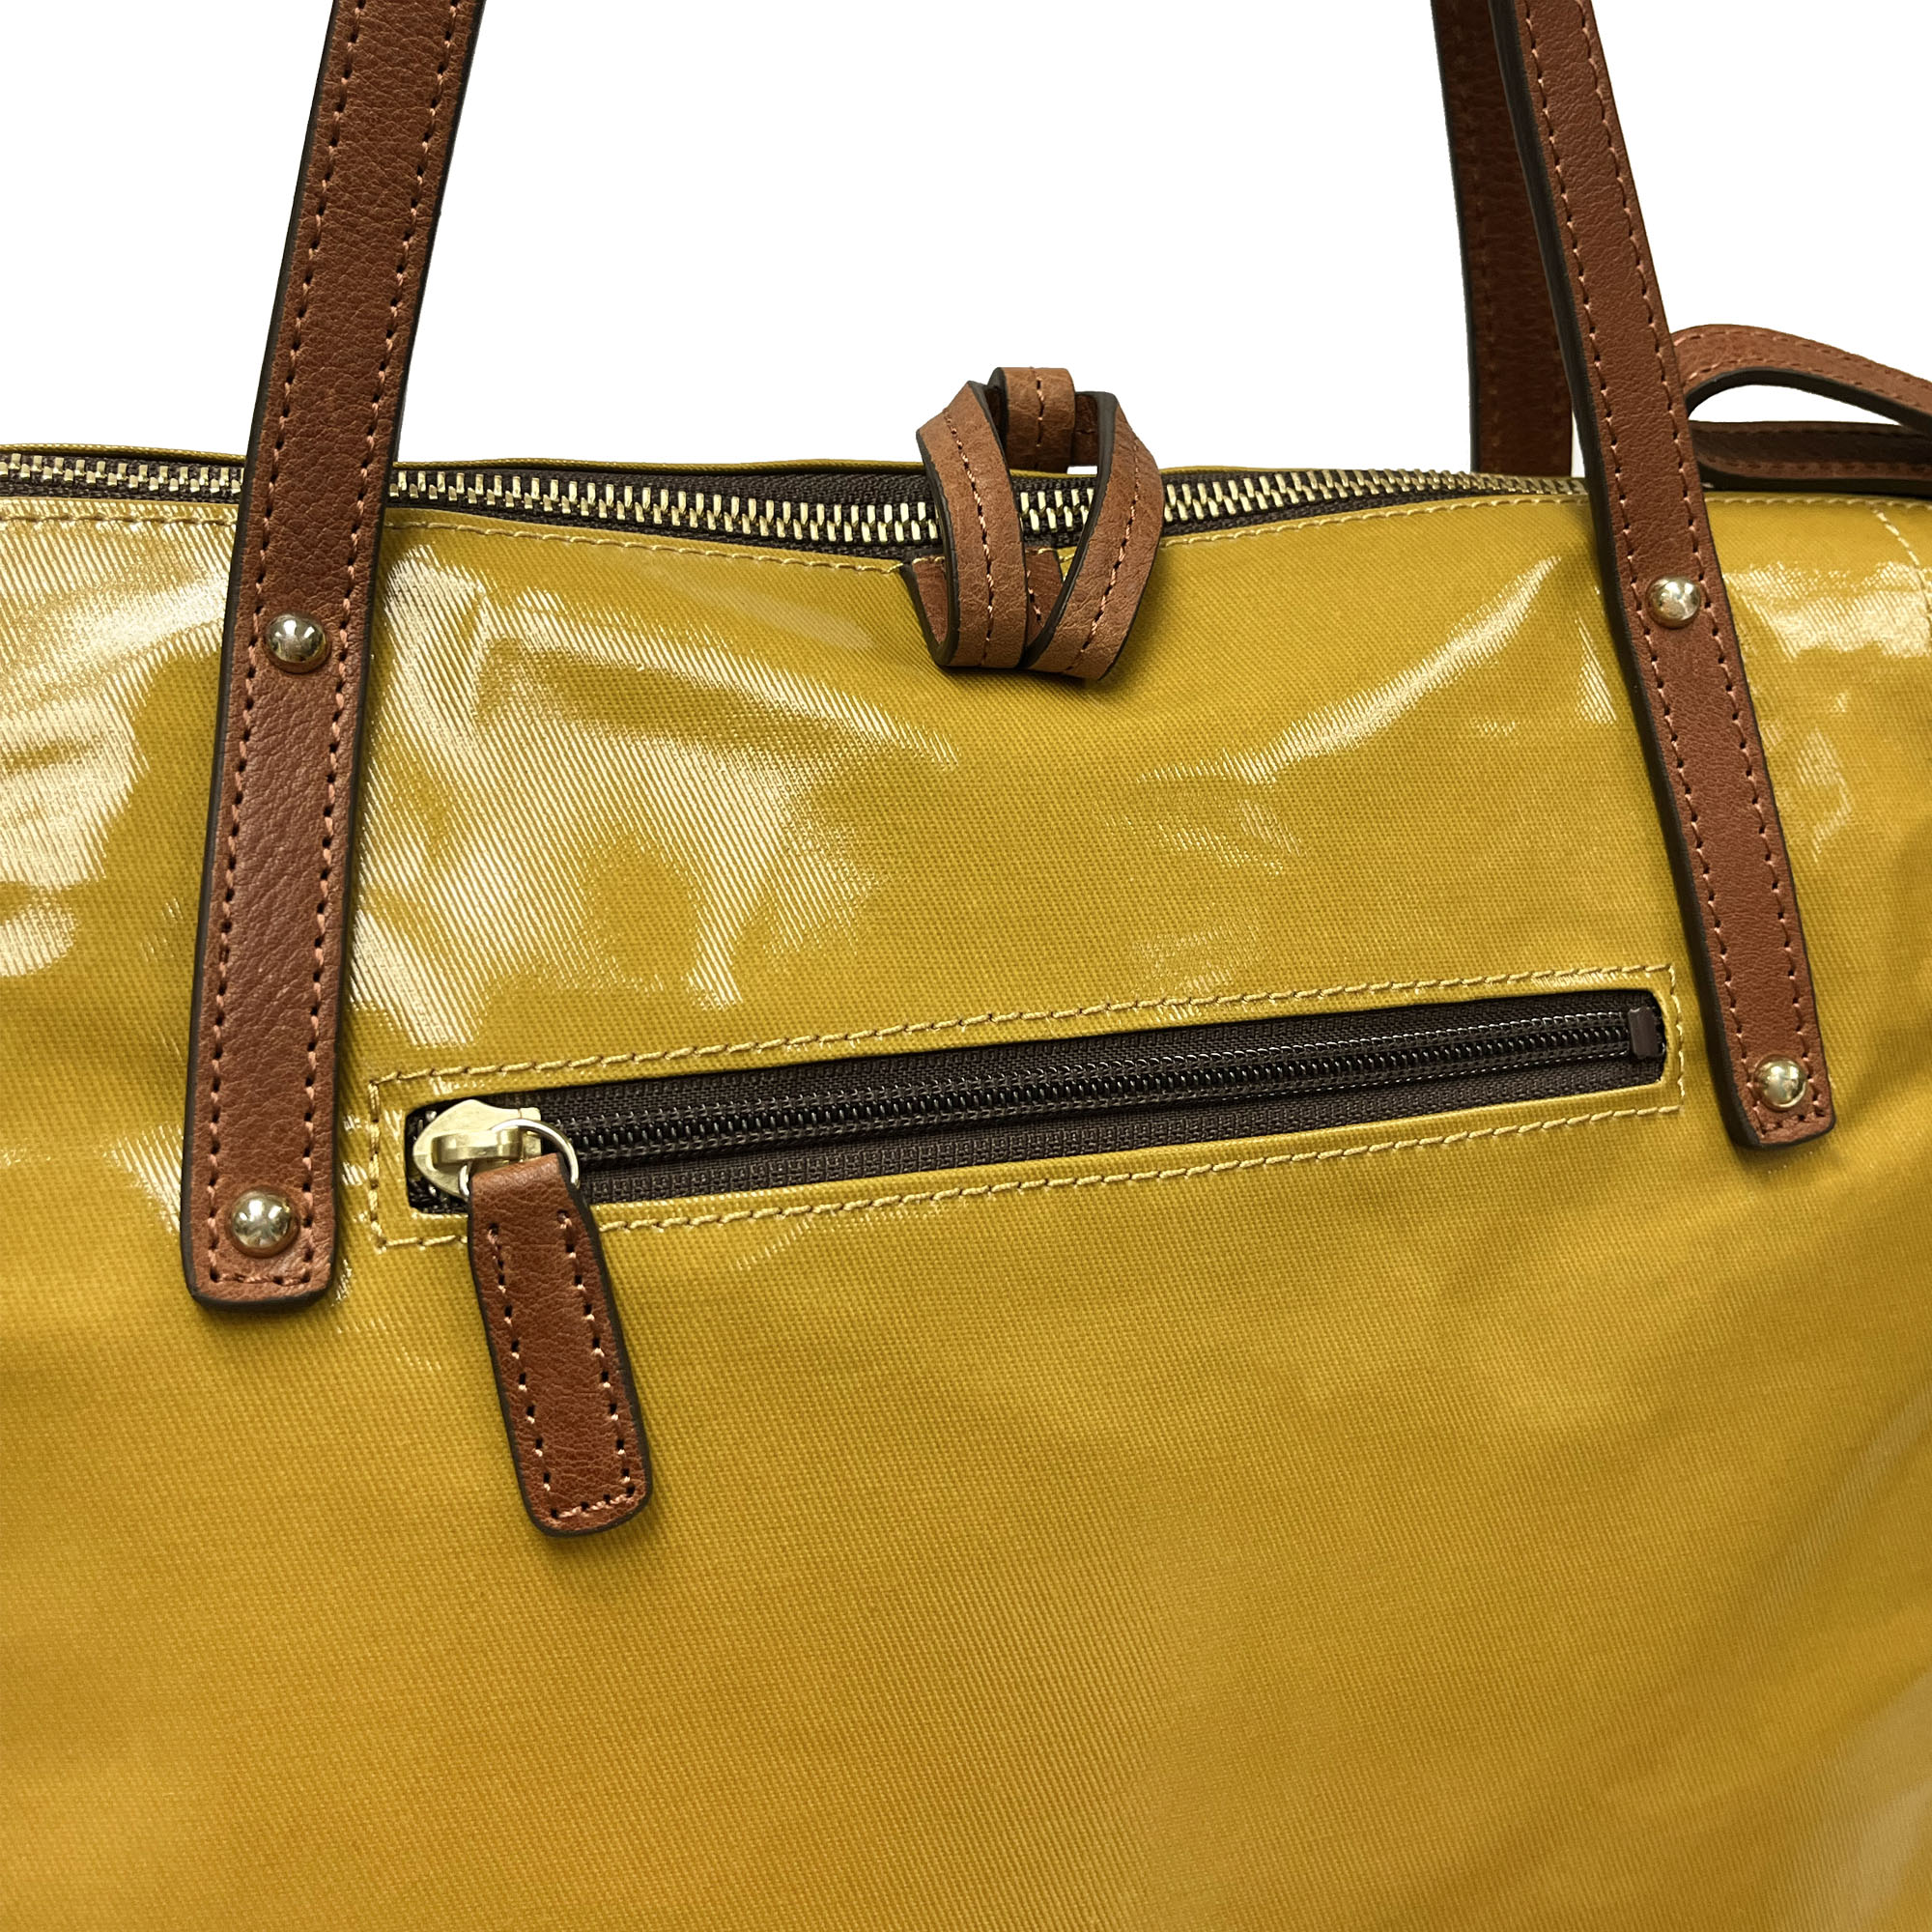 【NEW】LIFE |  Waterproof Tote Bag (Mustard Yellow)